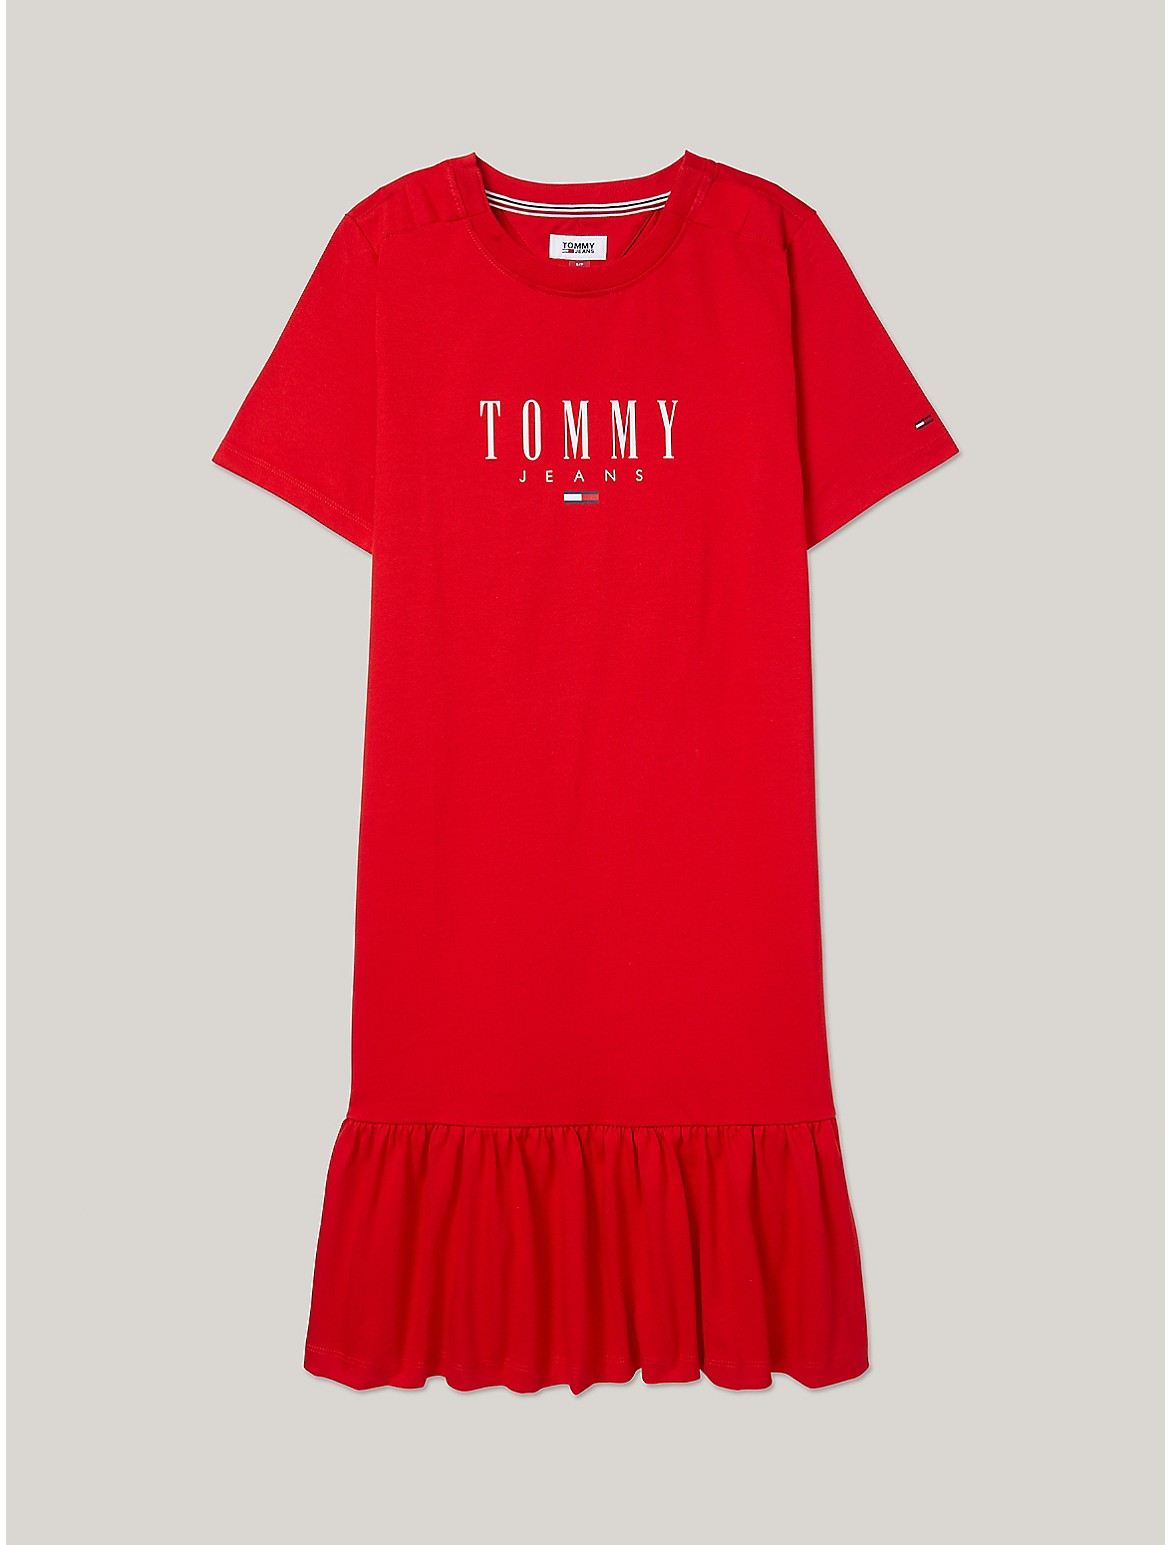 Tommy Hilfiger Women's Tommy Jeans T-Shirt Dress